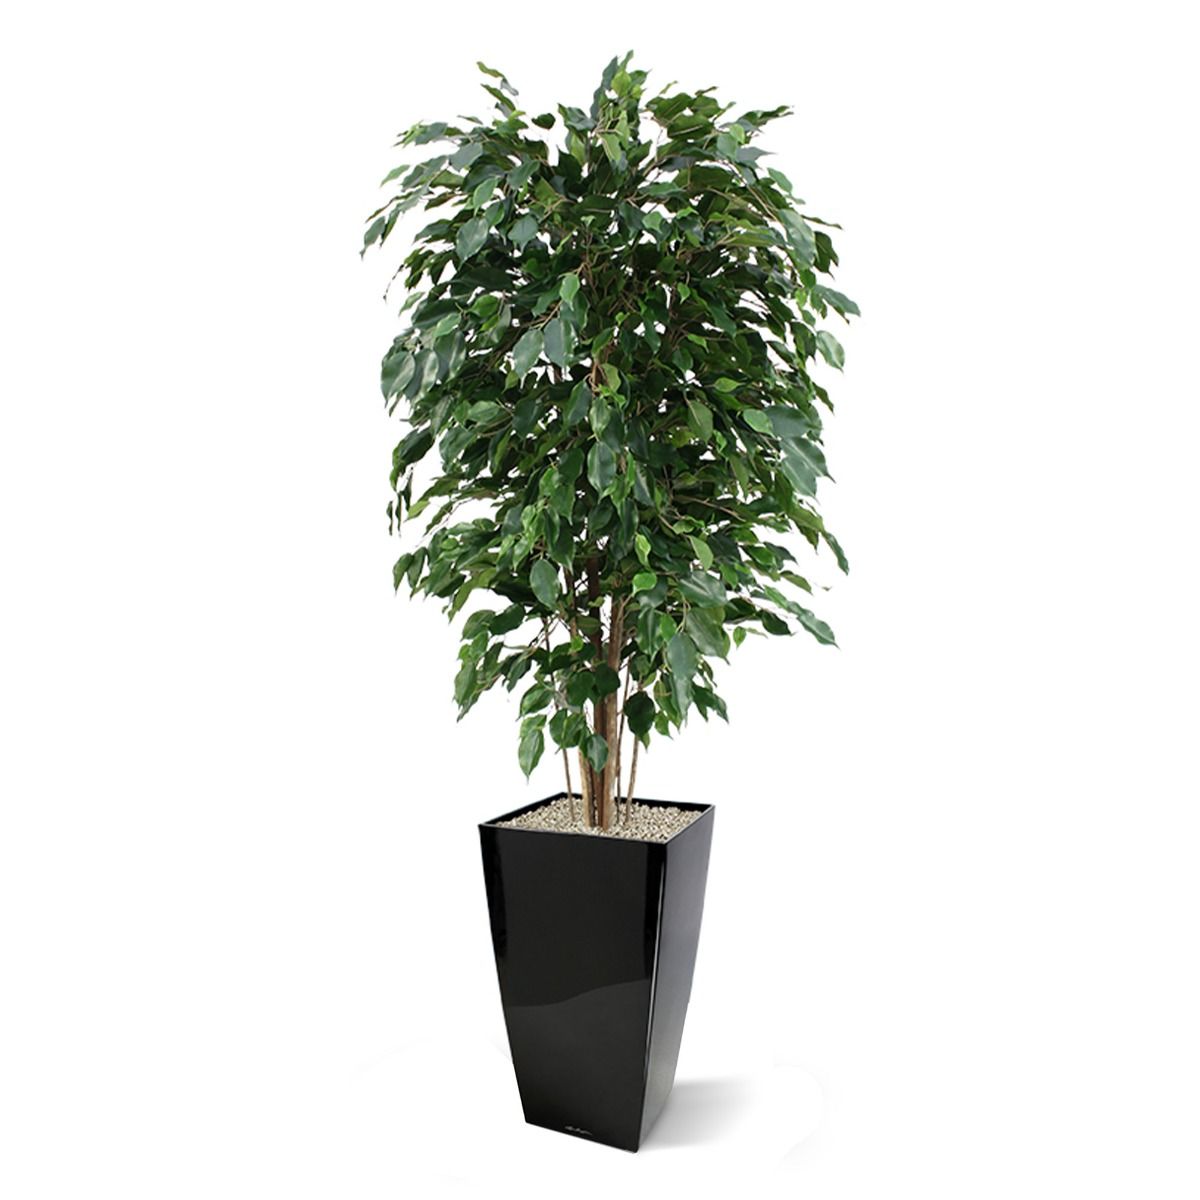 Pflanzenglanz® Ficus Kunstpflanze Exotica Deluxe 150 cm grün Kunstbaum